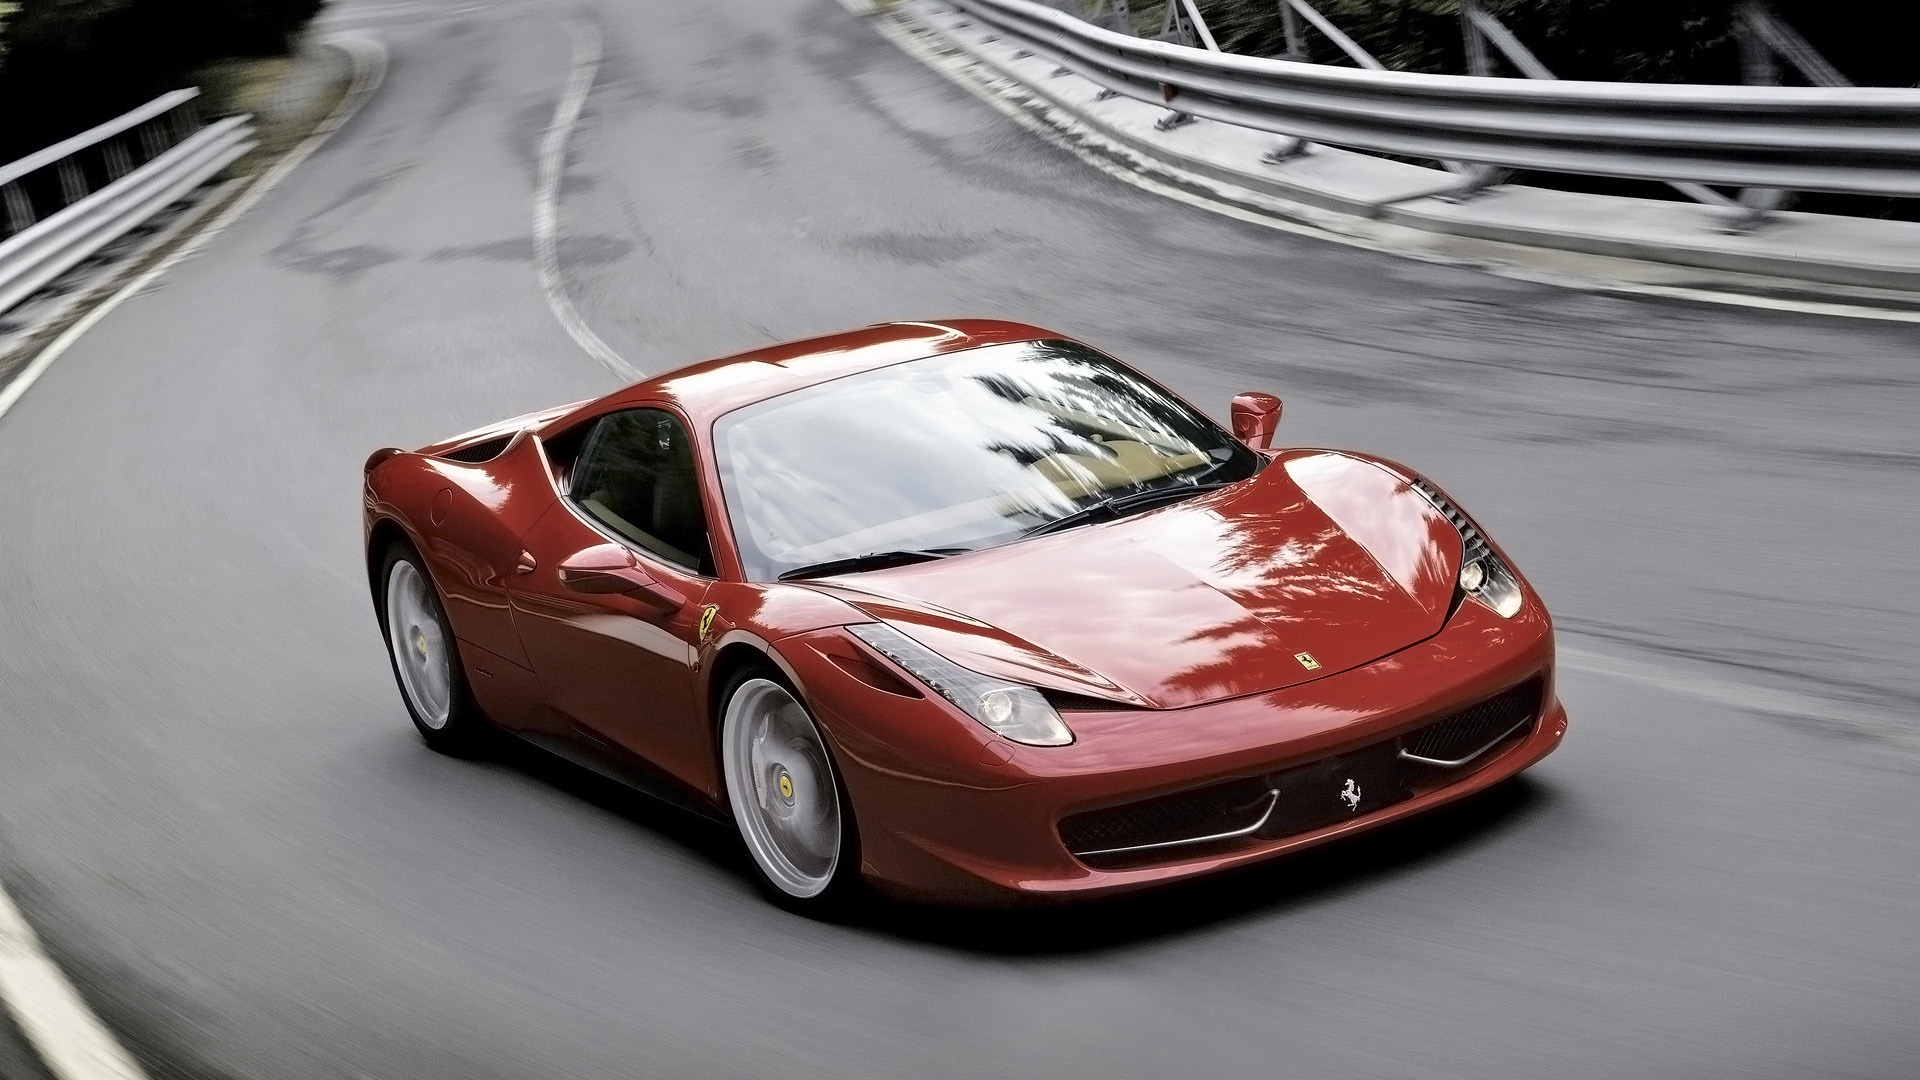 2011 Ferrari 458 Italia Red Speed for 1920 x 1080 HDTV 1080p resolution